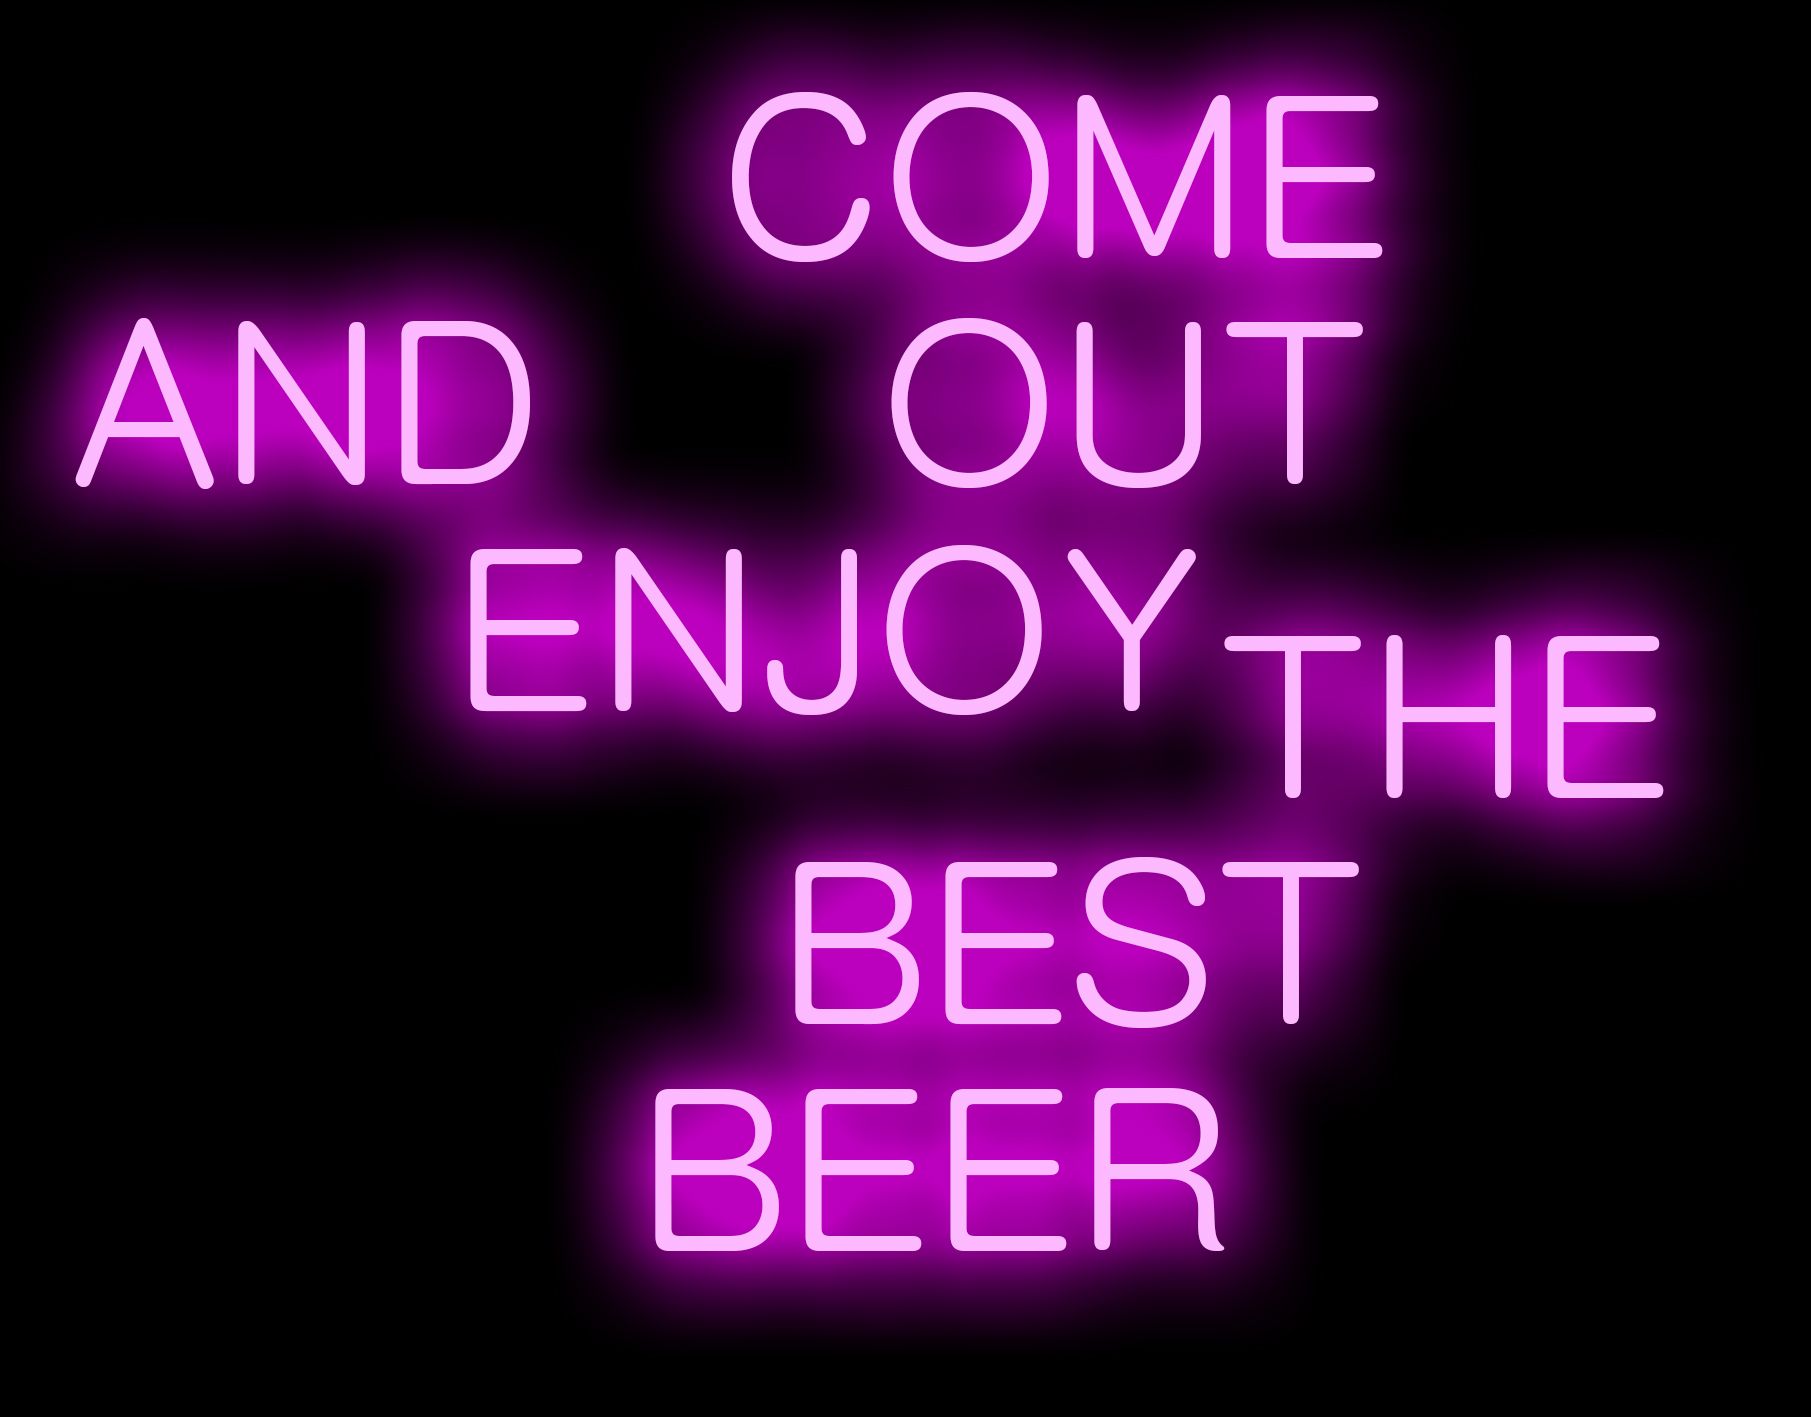 New Miller Lite Palm Tree Beer Bar Pub Neon Light Sign 19"x15"